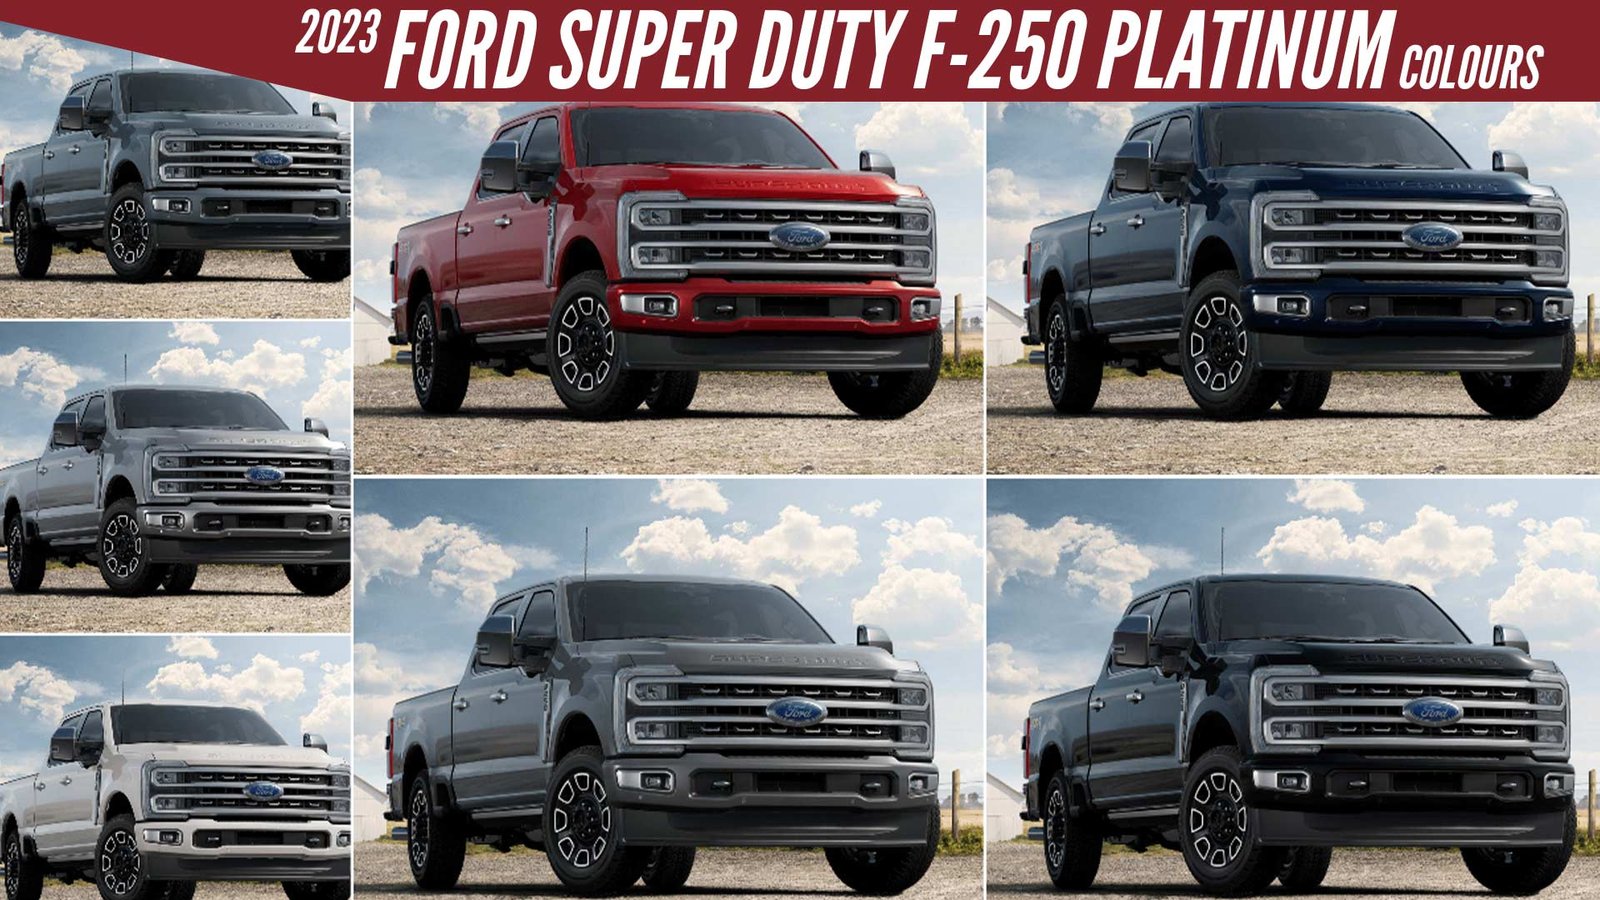 2023 Ford Super Duty F250 Platinum Truck All Color Options Images AUTOBICS